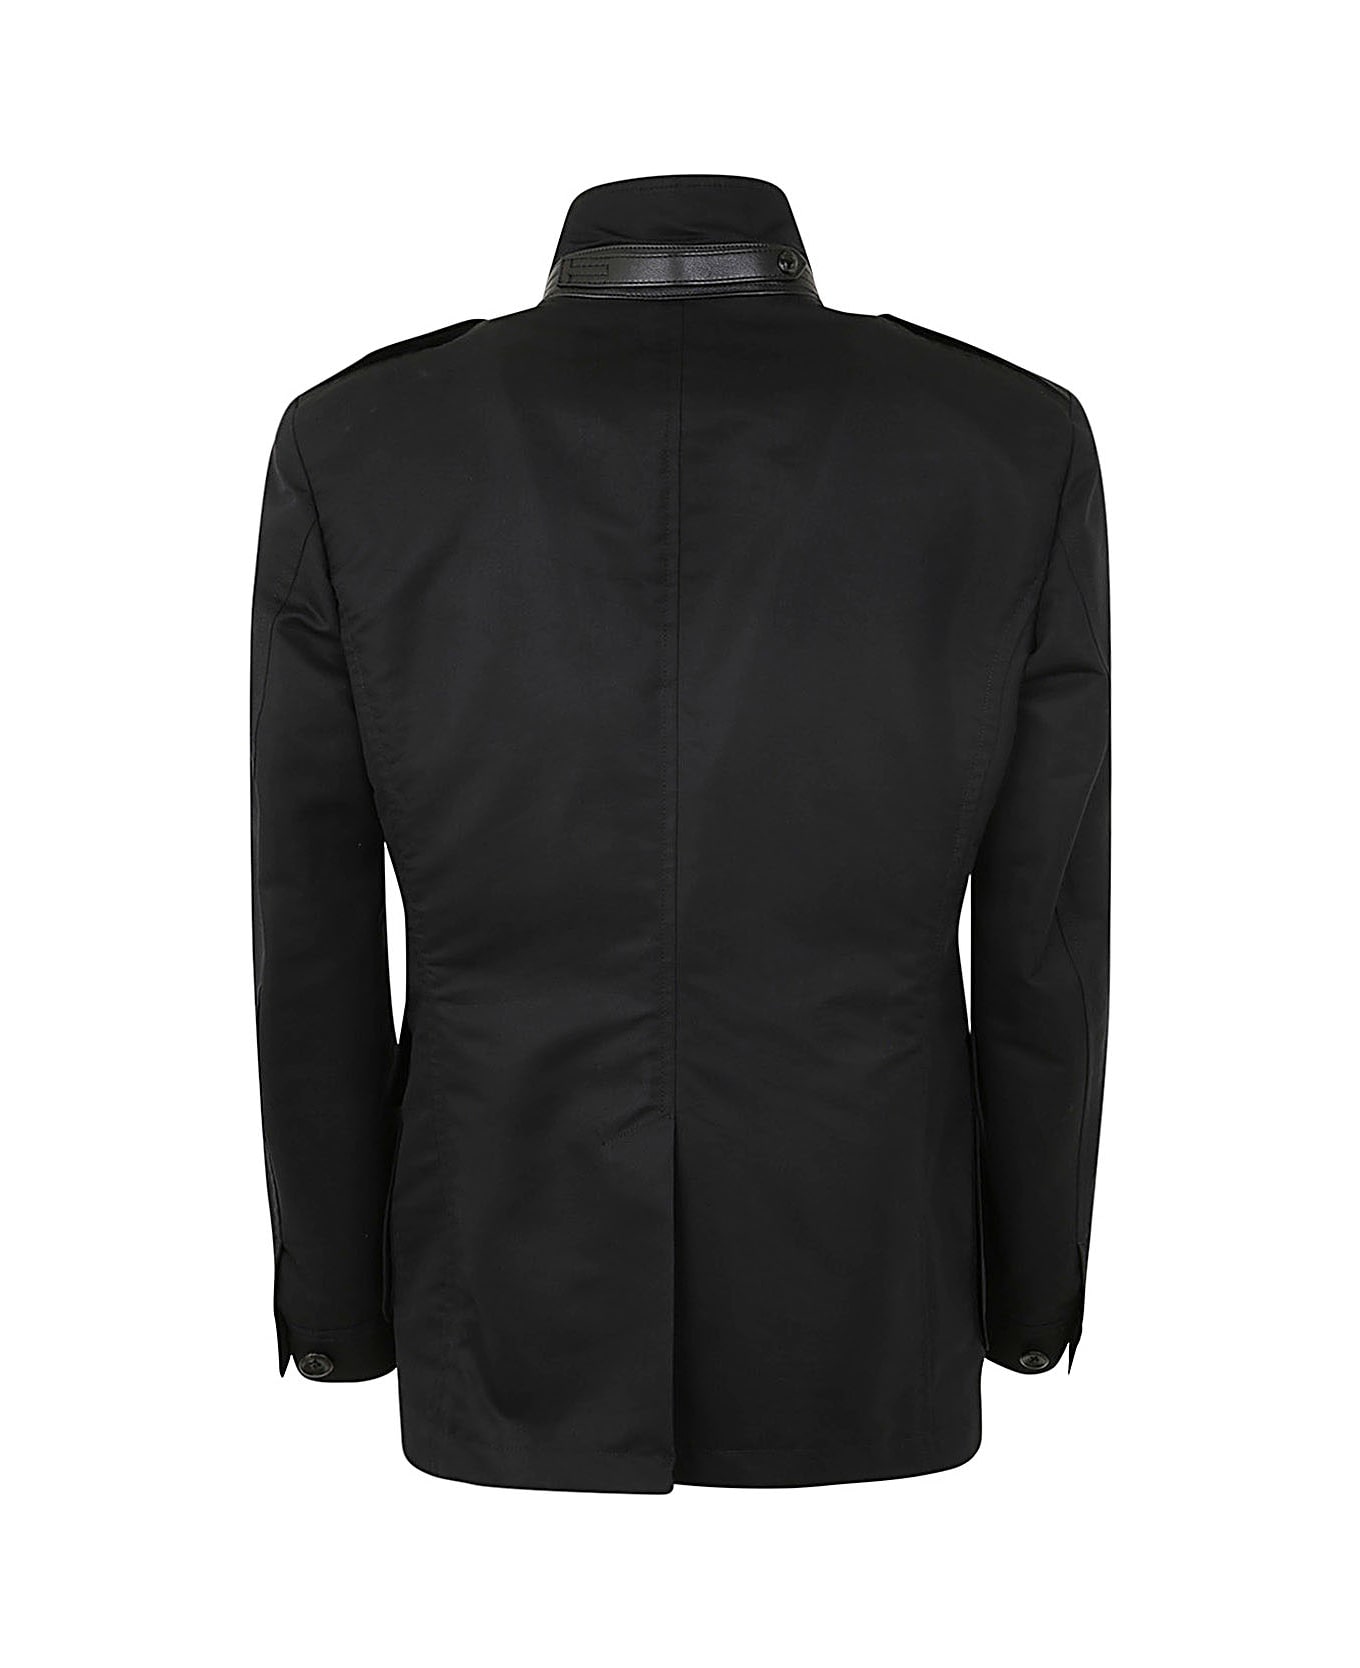 Tom Ford Outwear Jacket - Black ジャケット